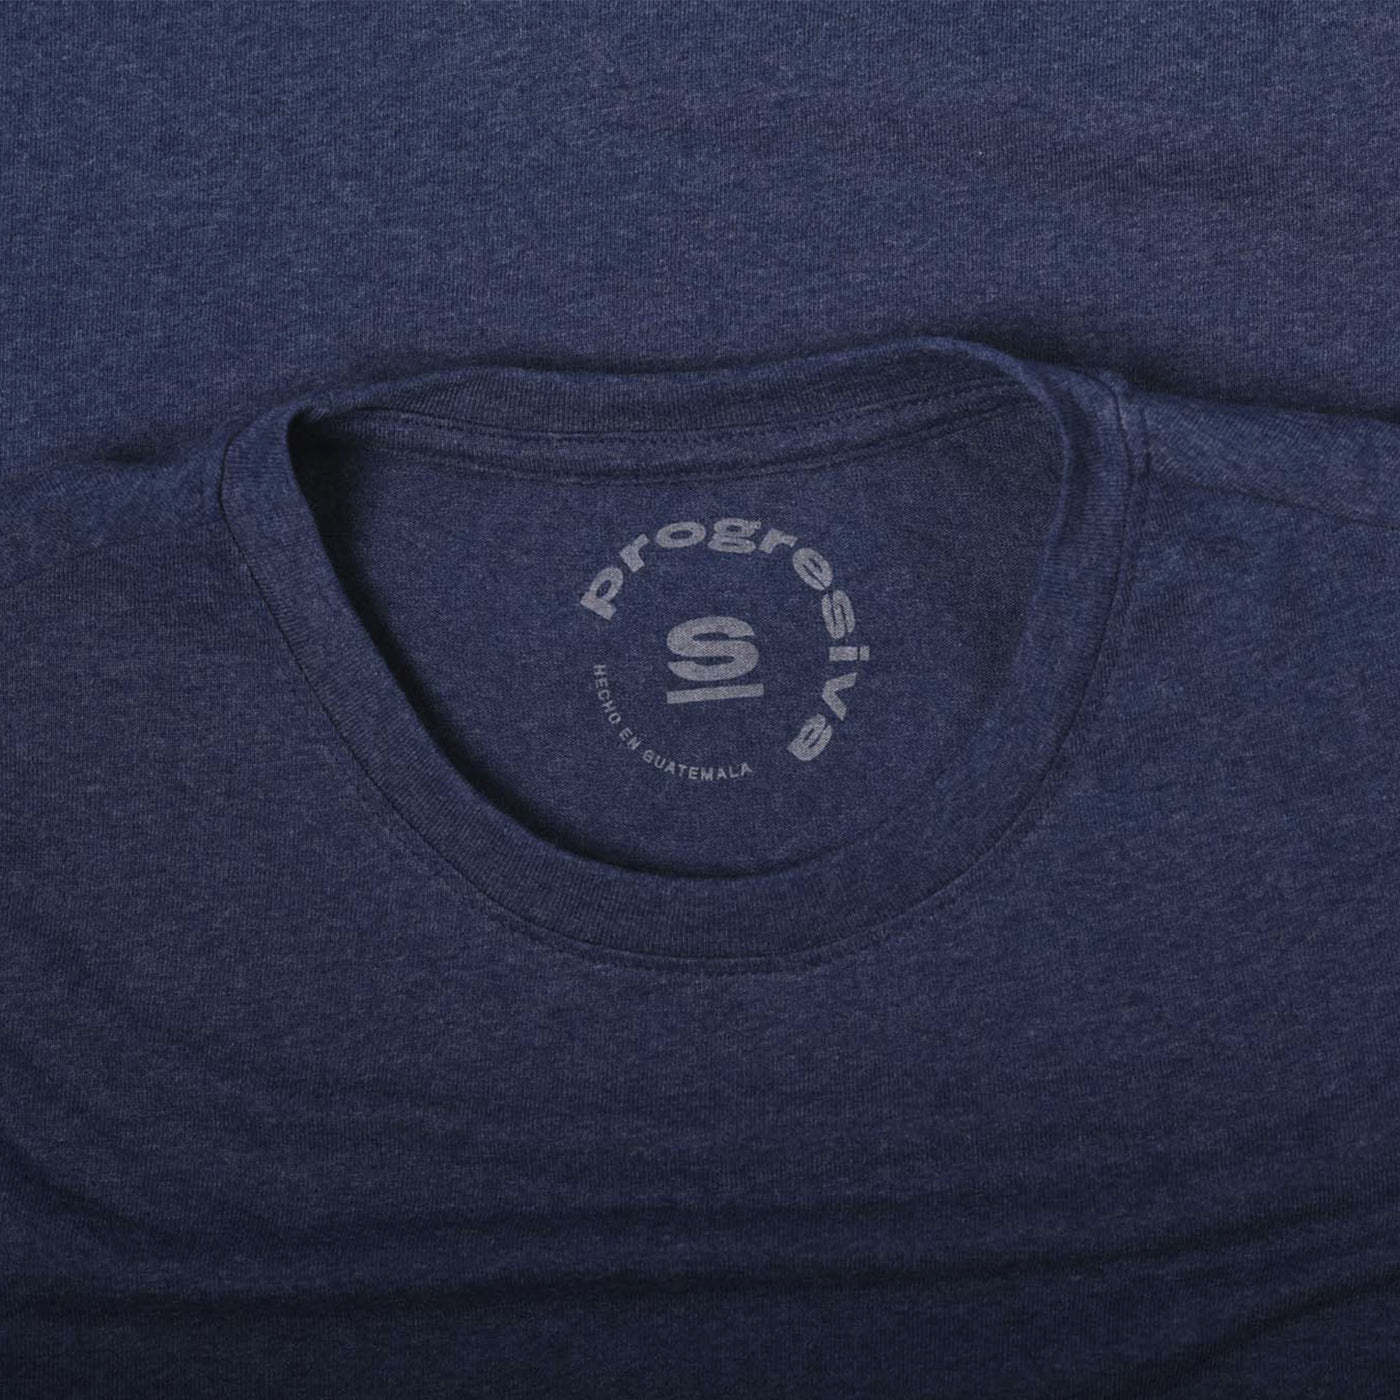 T-Shirt To Go larga - azul